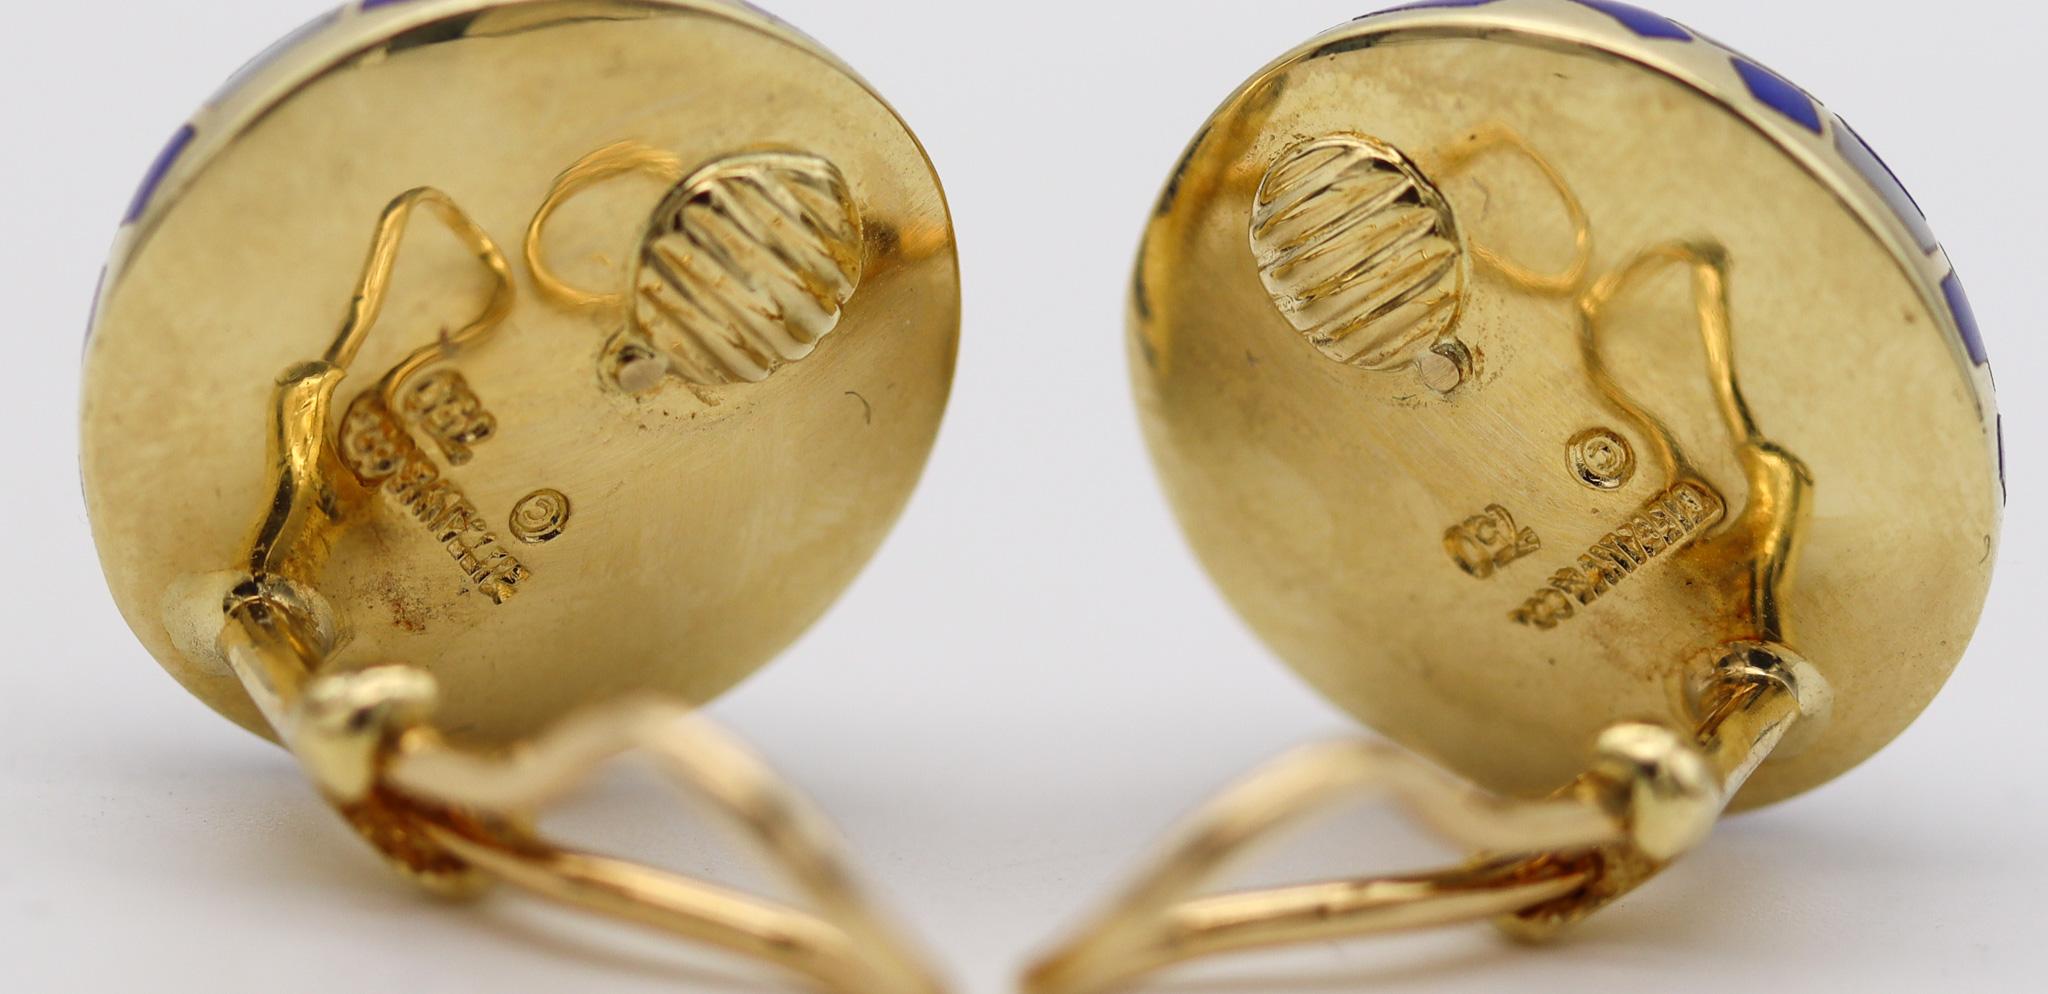 Tiffany & Co. Angela Cummings gewölbte Clip-Ohrringe aus 18 Karat Gold mit Lapislazuli (Cabochon) im Angebot